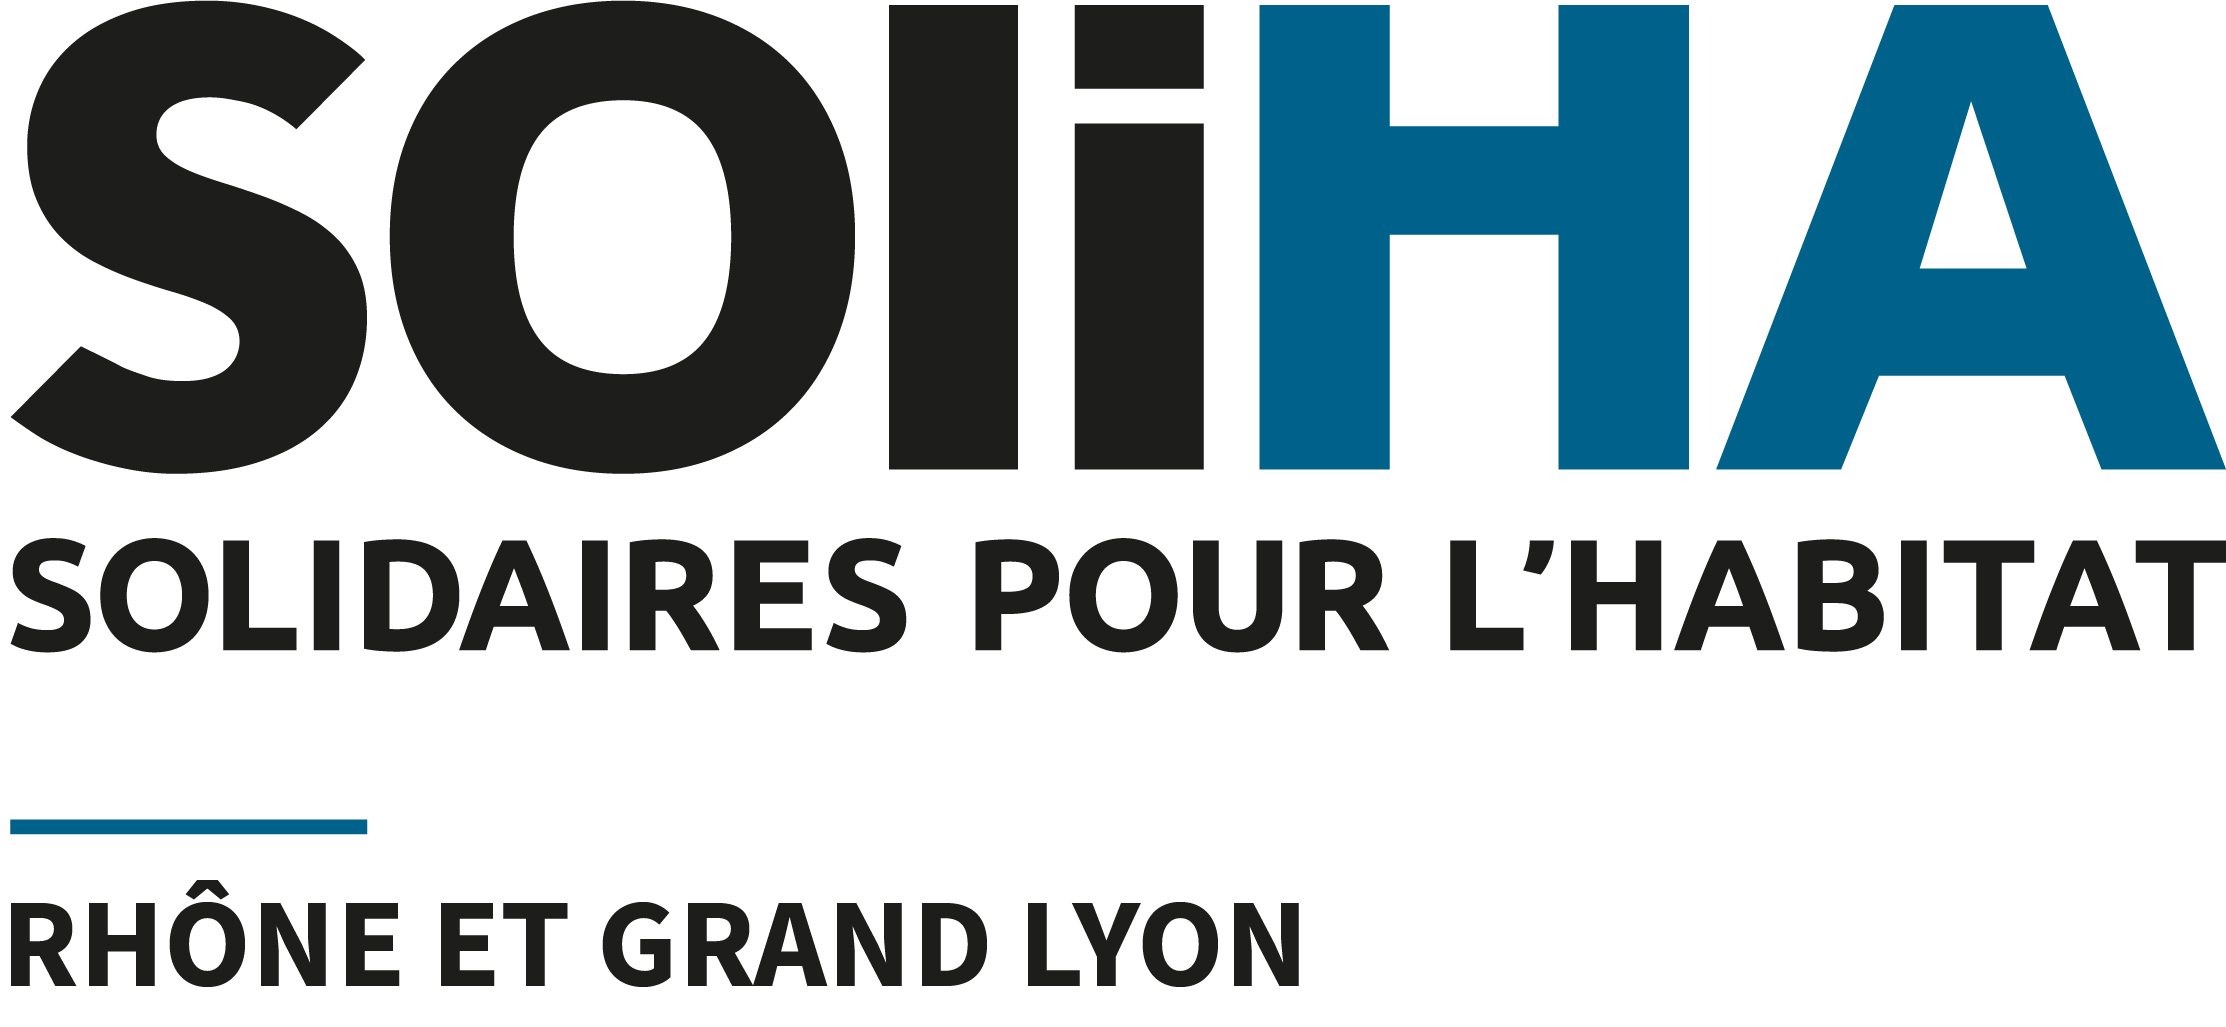 \\DATA-SOLIHA01\Commun\03-CHARTE_GRAPH-COMMUNICATION\CHARTE GRAPHIQUE 2021\LOGO SOLIHA\Rhône_Grand_Lyon\JPG\SOL-logo-Rhône-et-Grand-Lyon-rvb.jpg